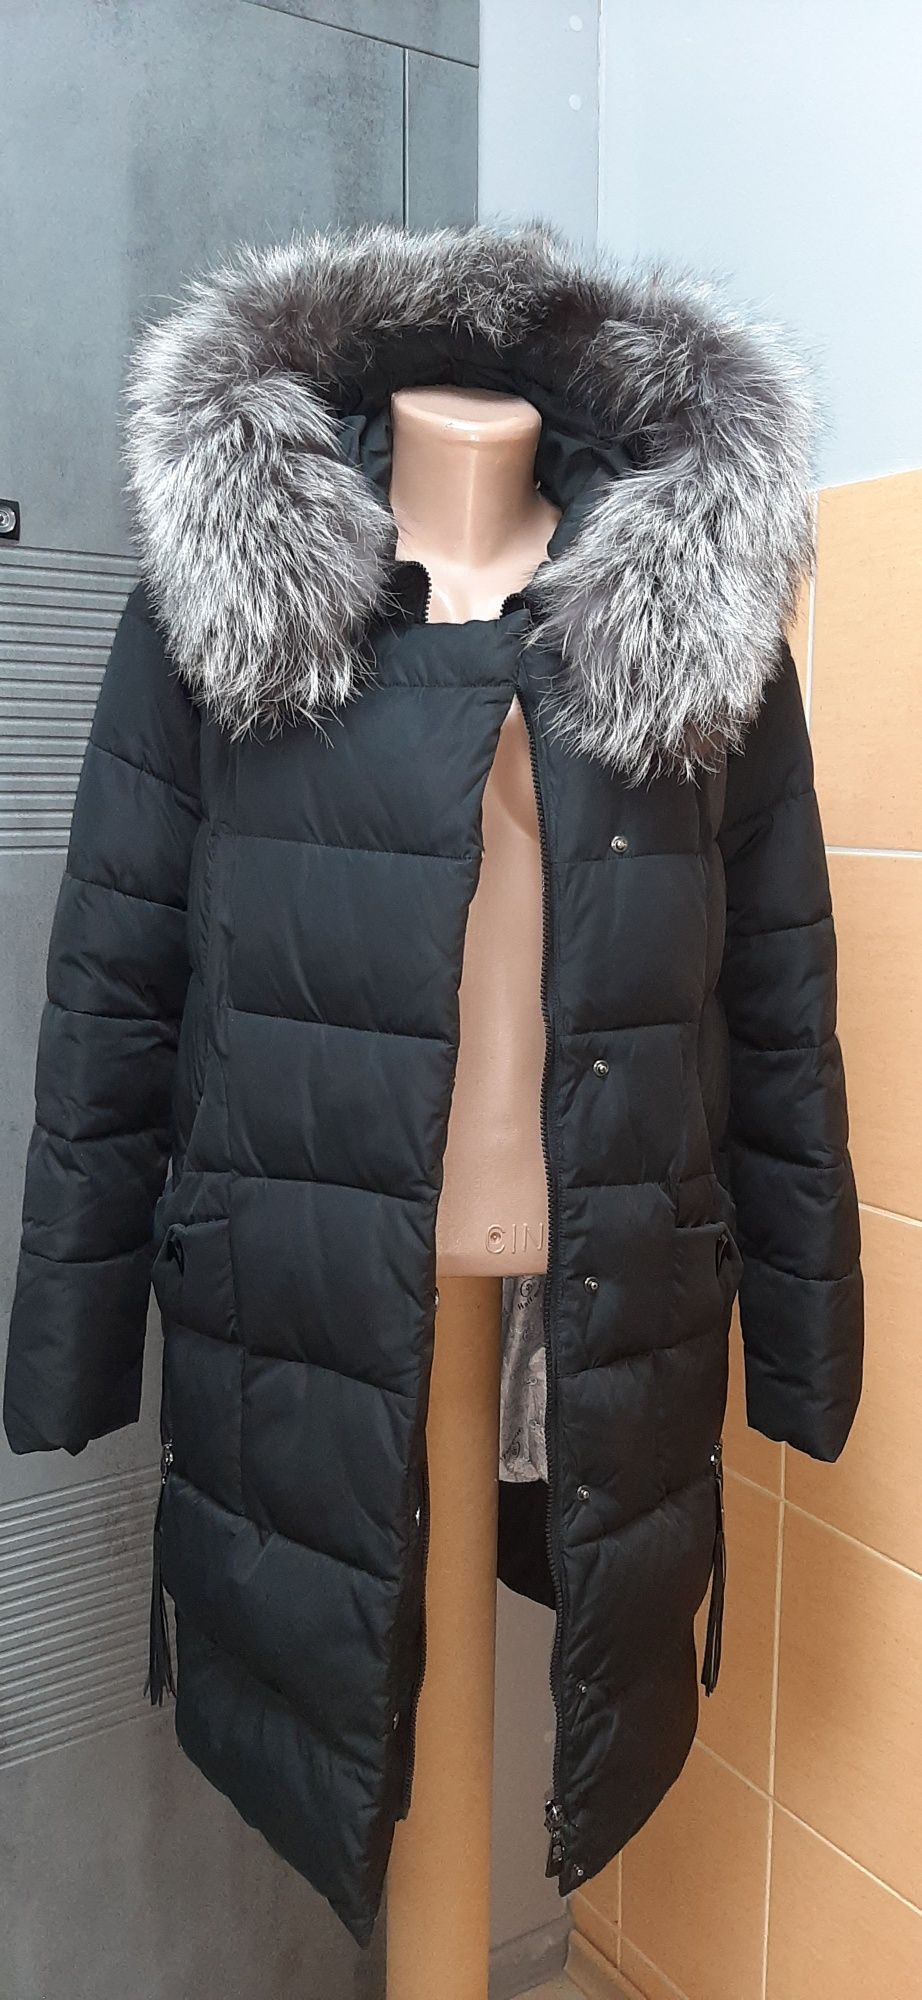 Куртка женская HAYLUOZI 	44-46 размера
	
Розмір 	44 (S-M)
ПОГ	50 см